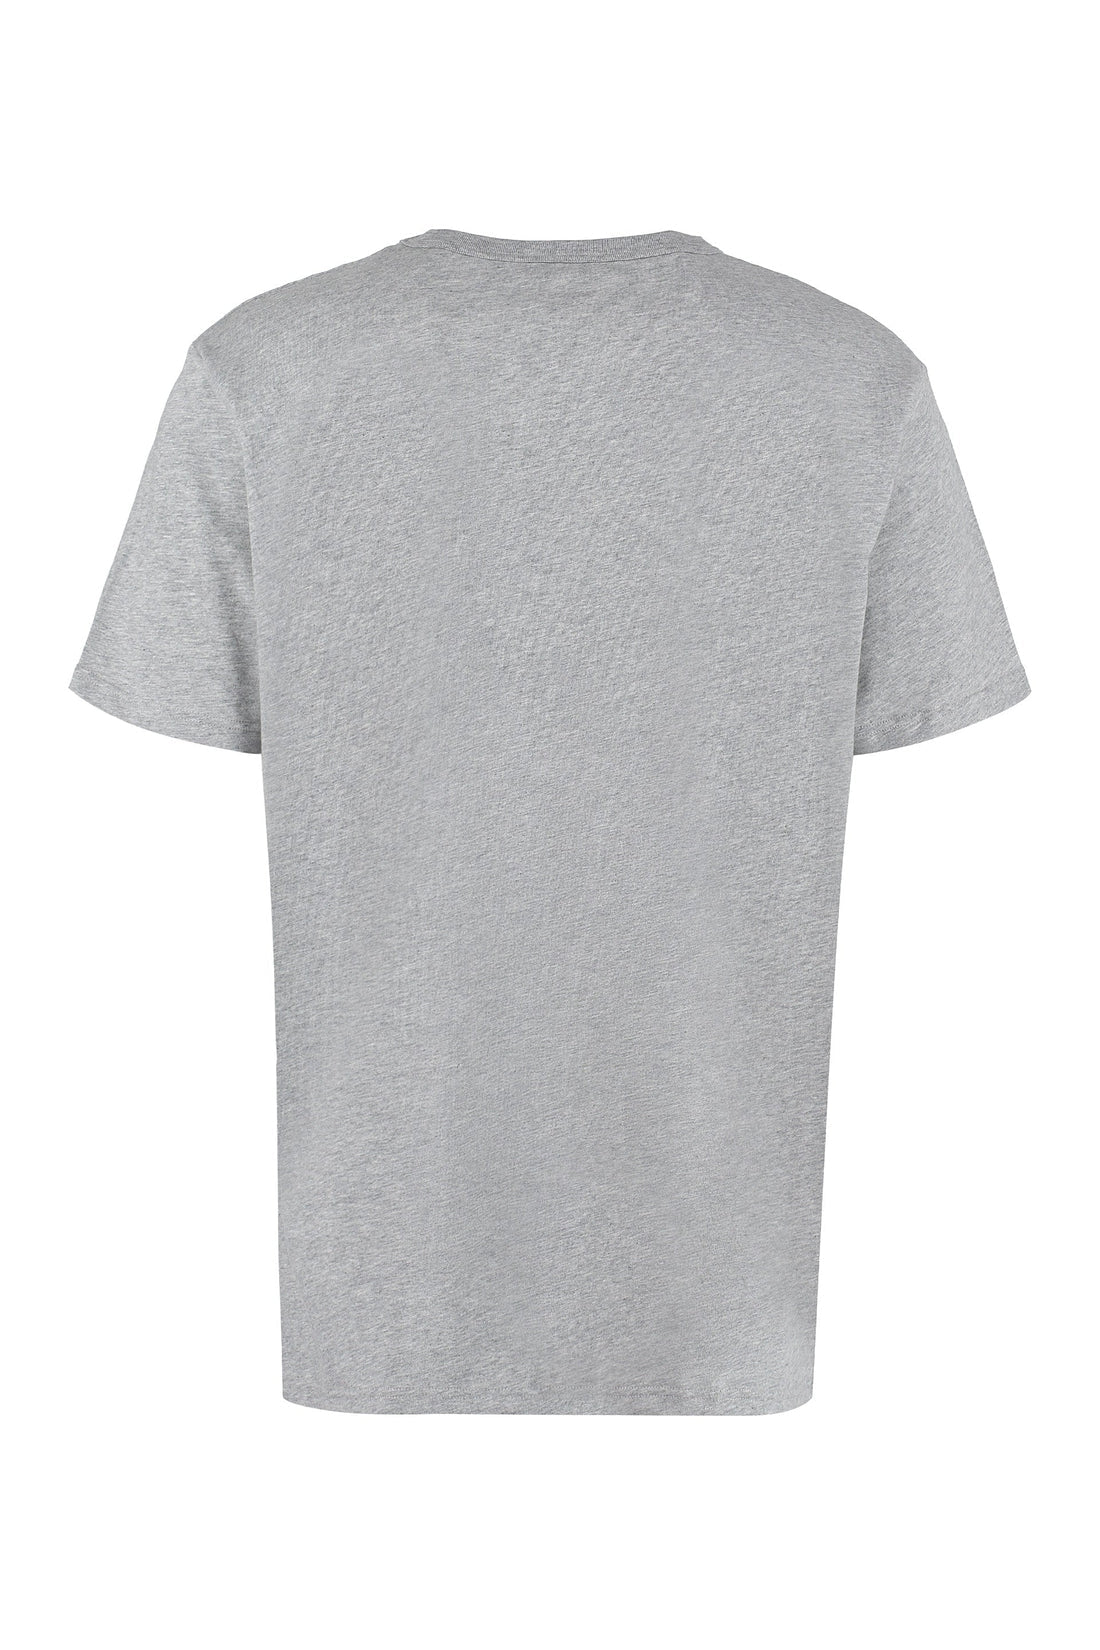 Alexander McQueen-OUTLET-SALE-Printed cotton T-shirt-ARCHIVIST